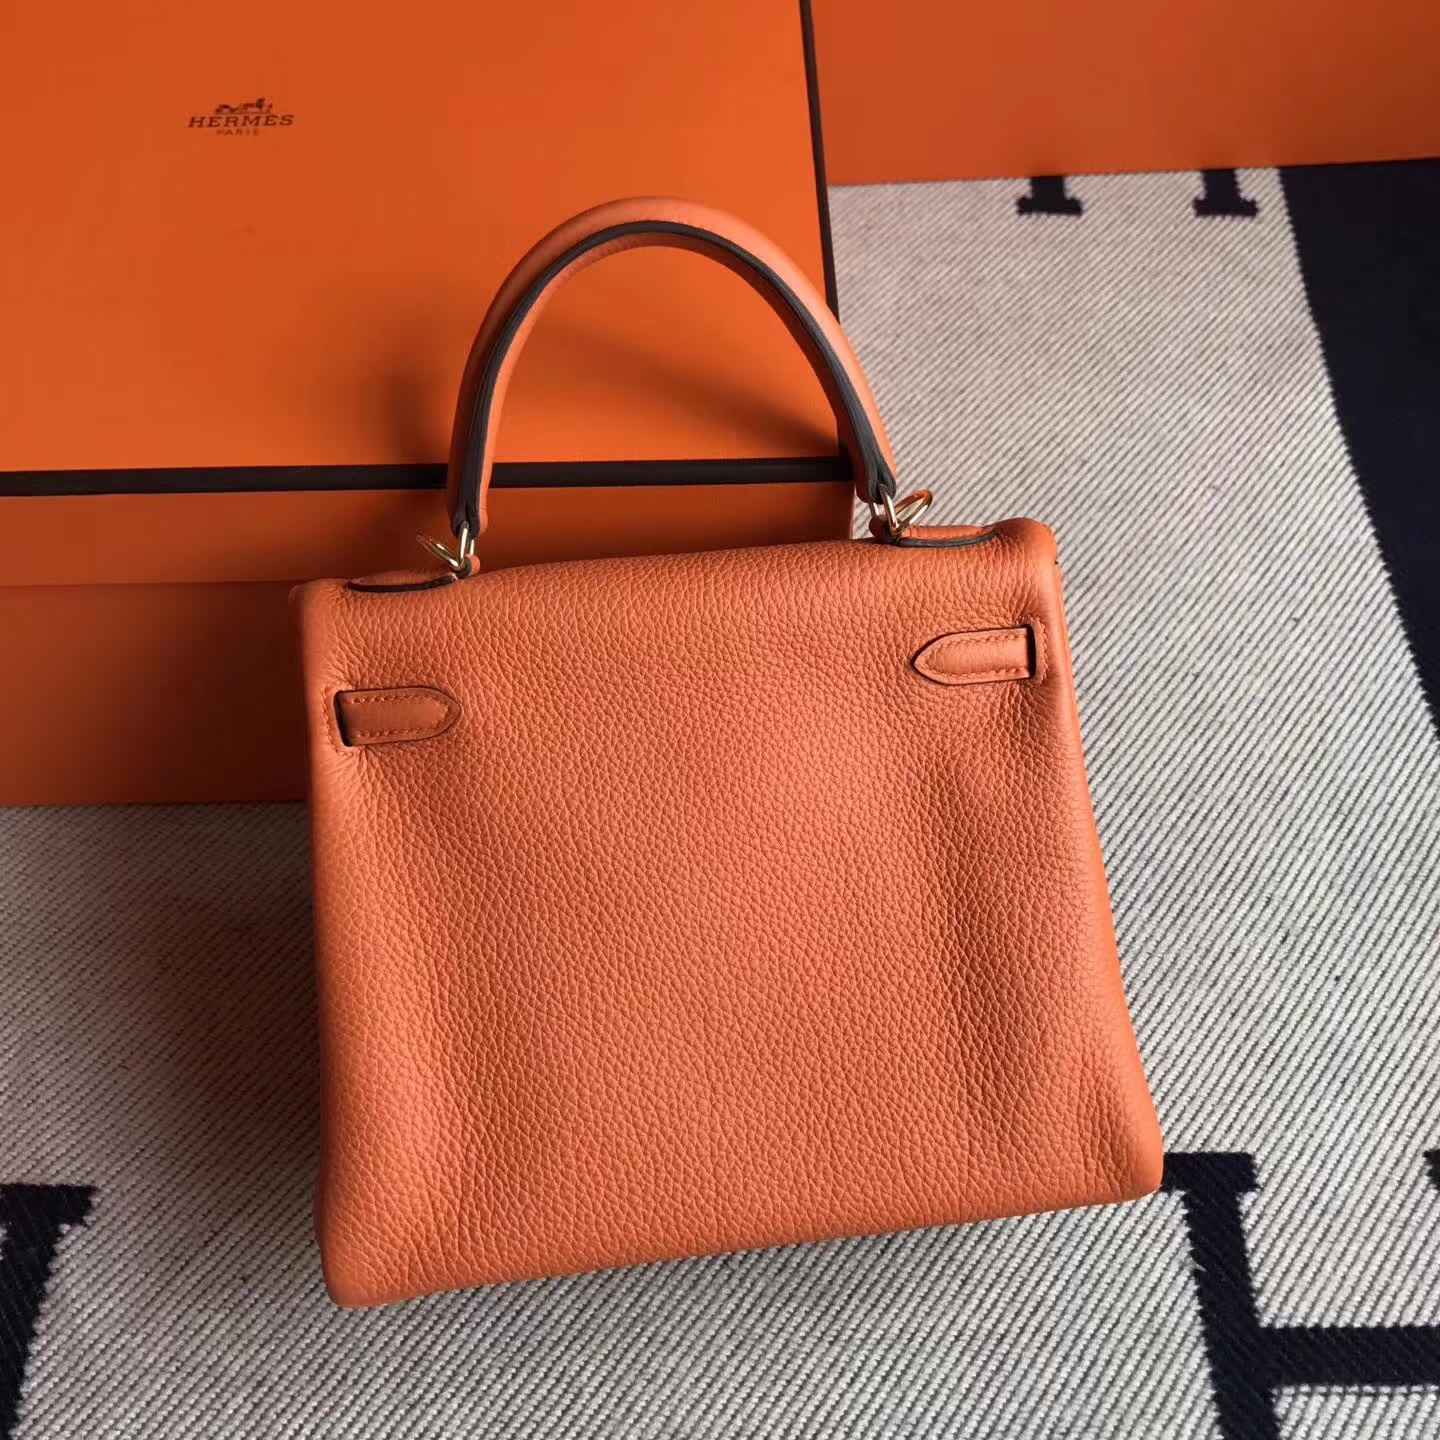 New Lovely Hermes Kelly Bag25cm in 93 Orange Togo Leather Gold Hardware